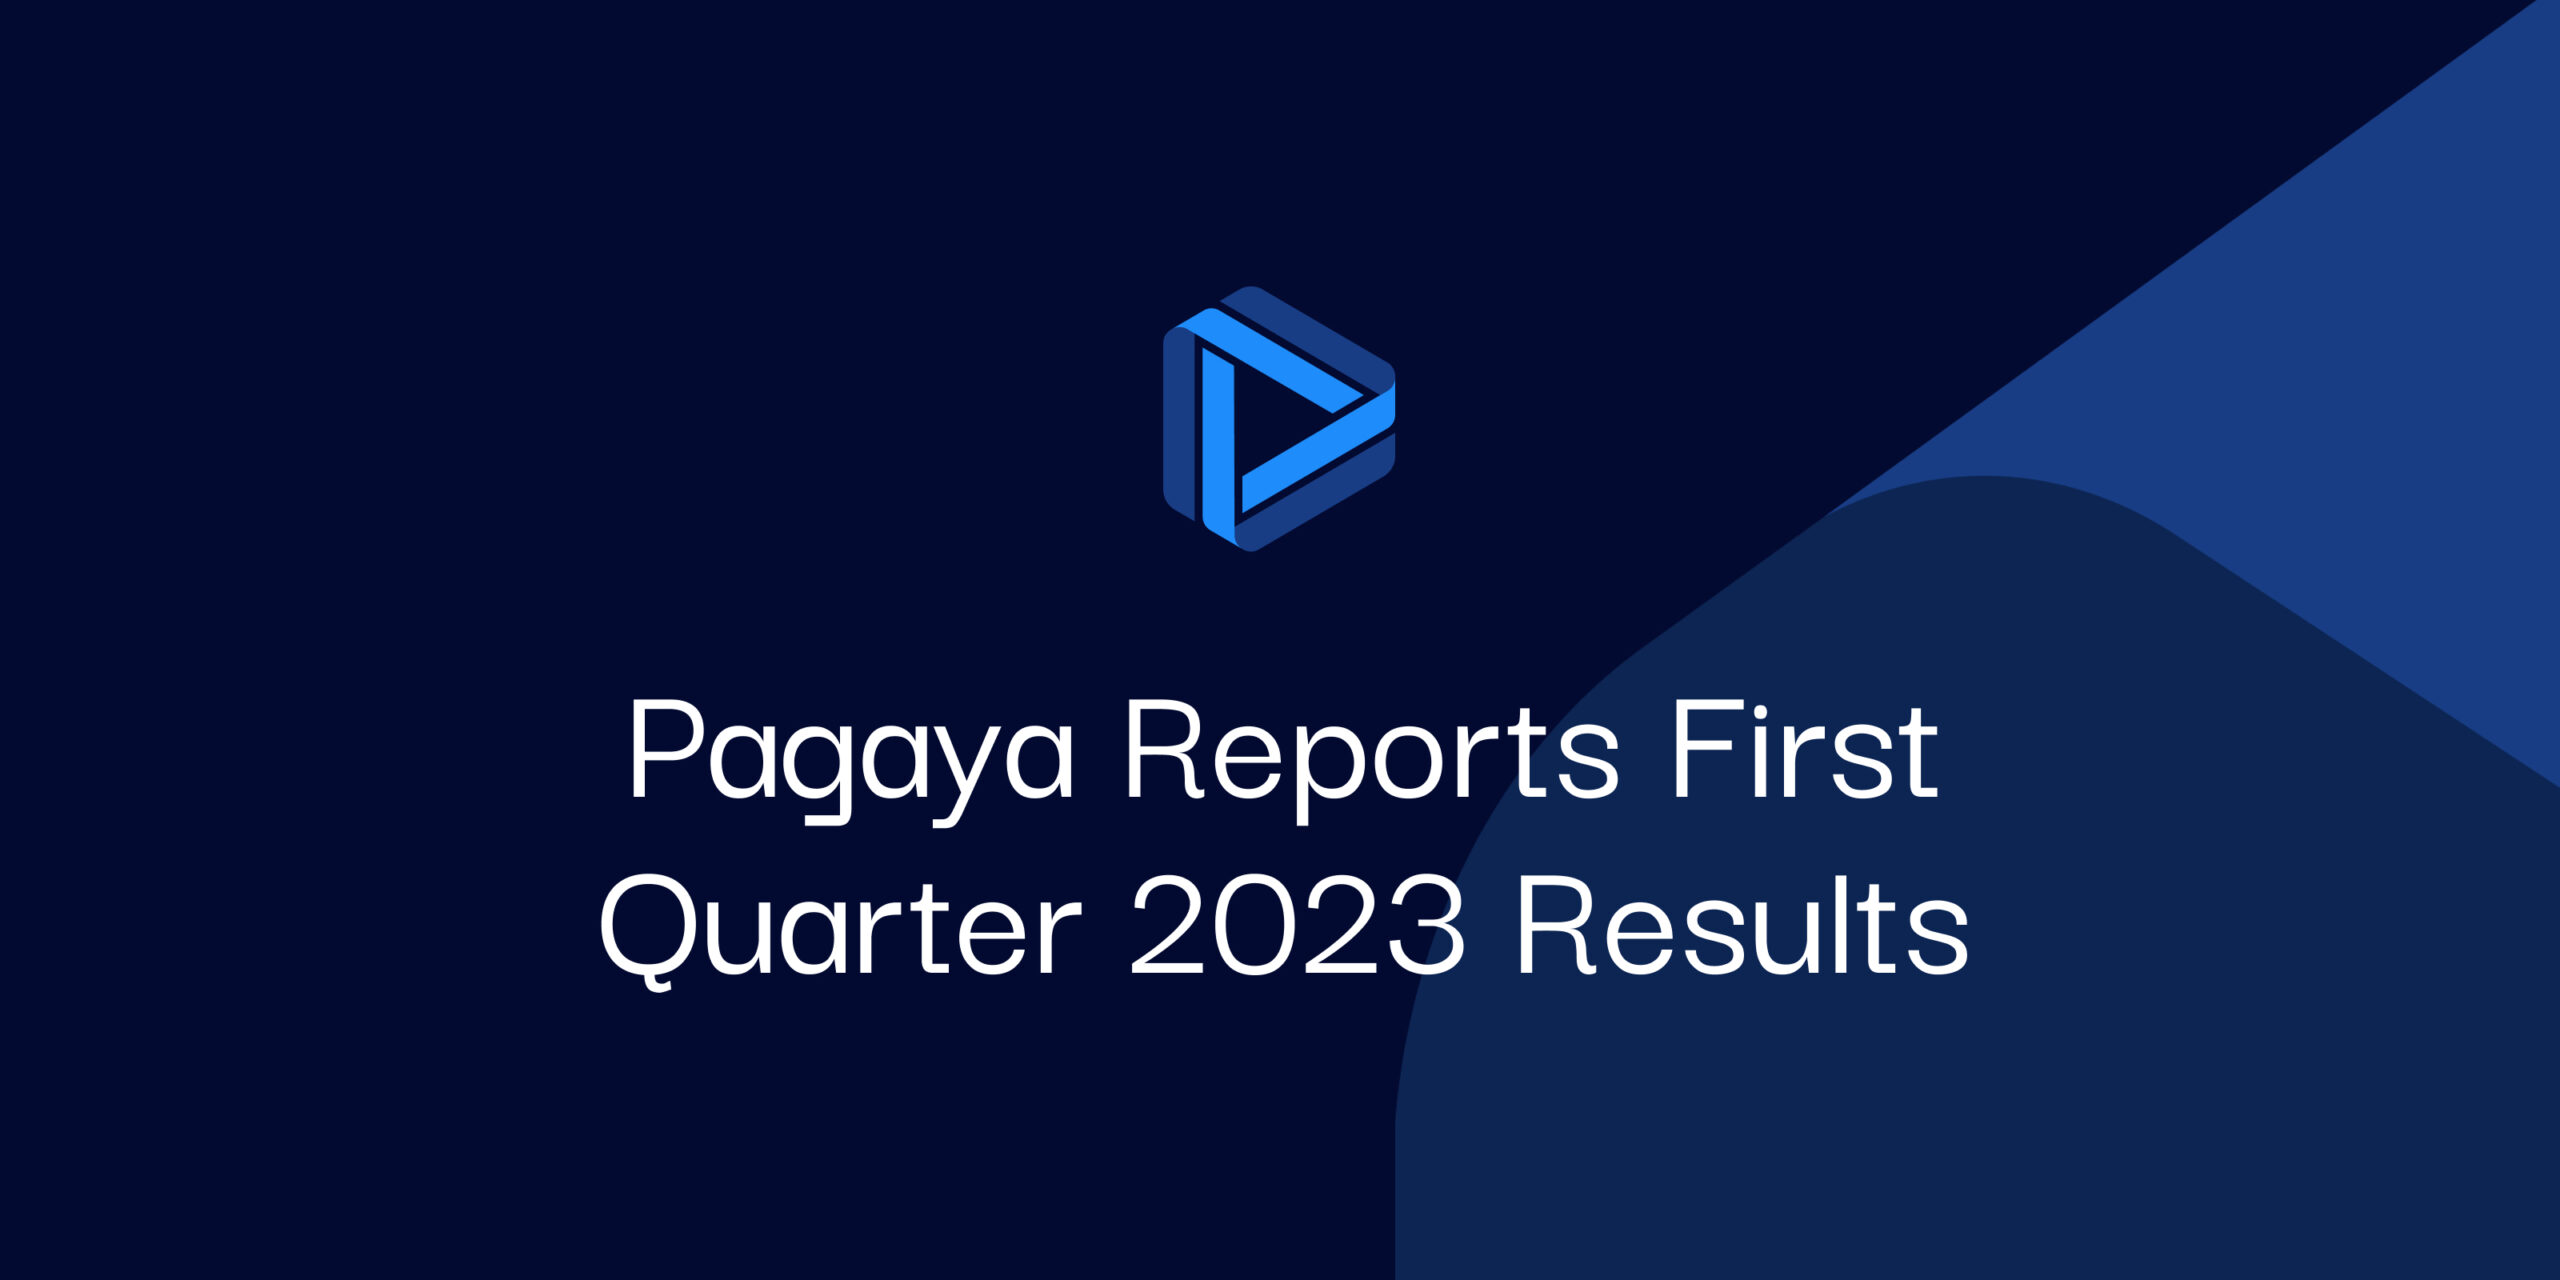 Pagaya Reports First Quarter 2023 Results